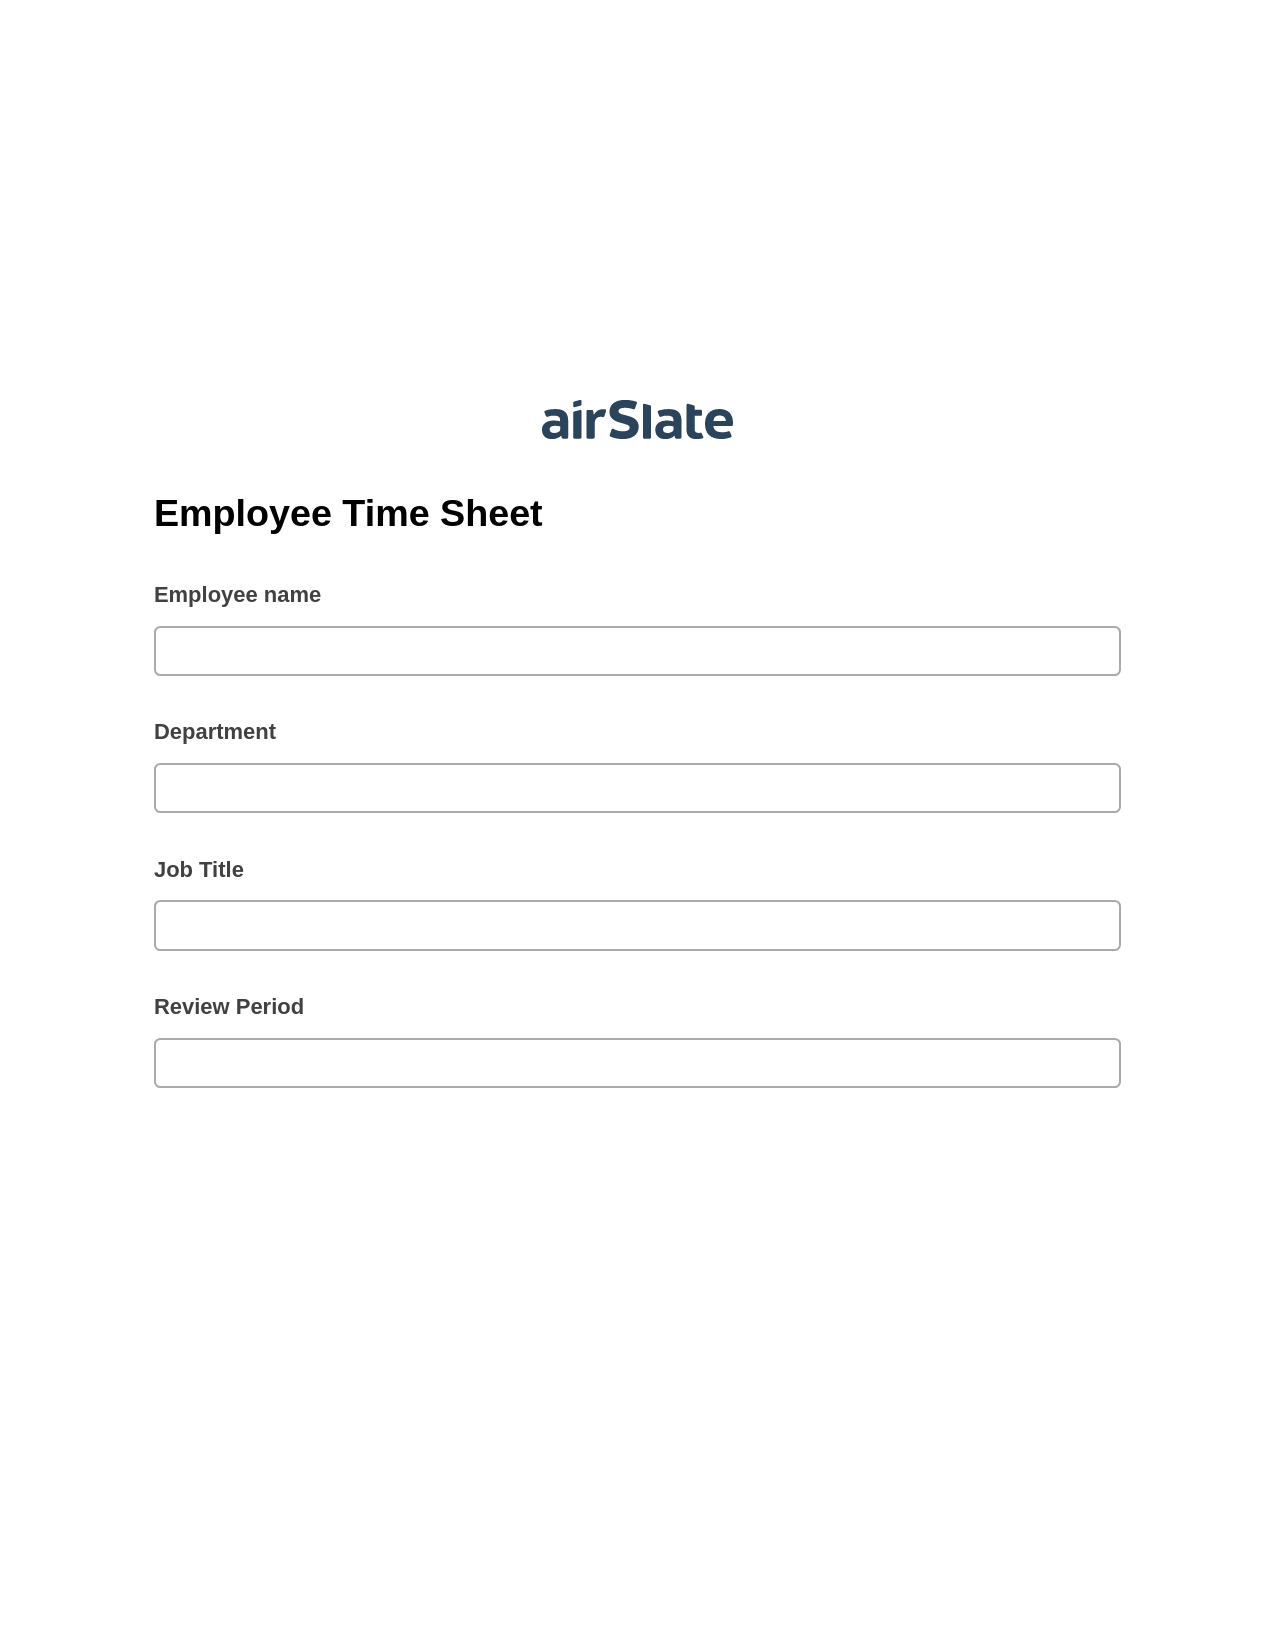 Multirole Employee Time Sheet Pre-fill from MS Dynamics 365 Records, Google Calendar Bot, Slack Two-Way Binding Bot